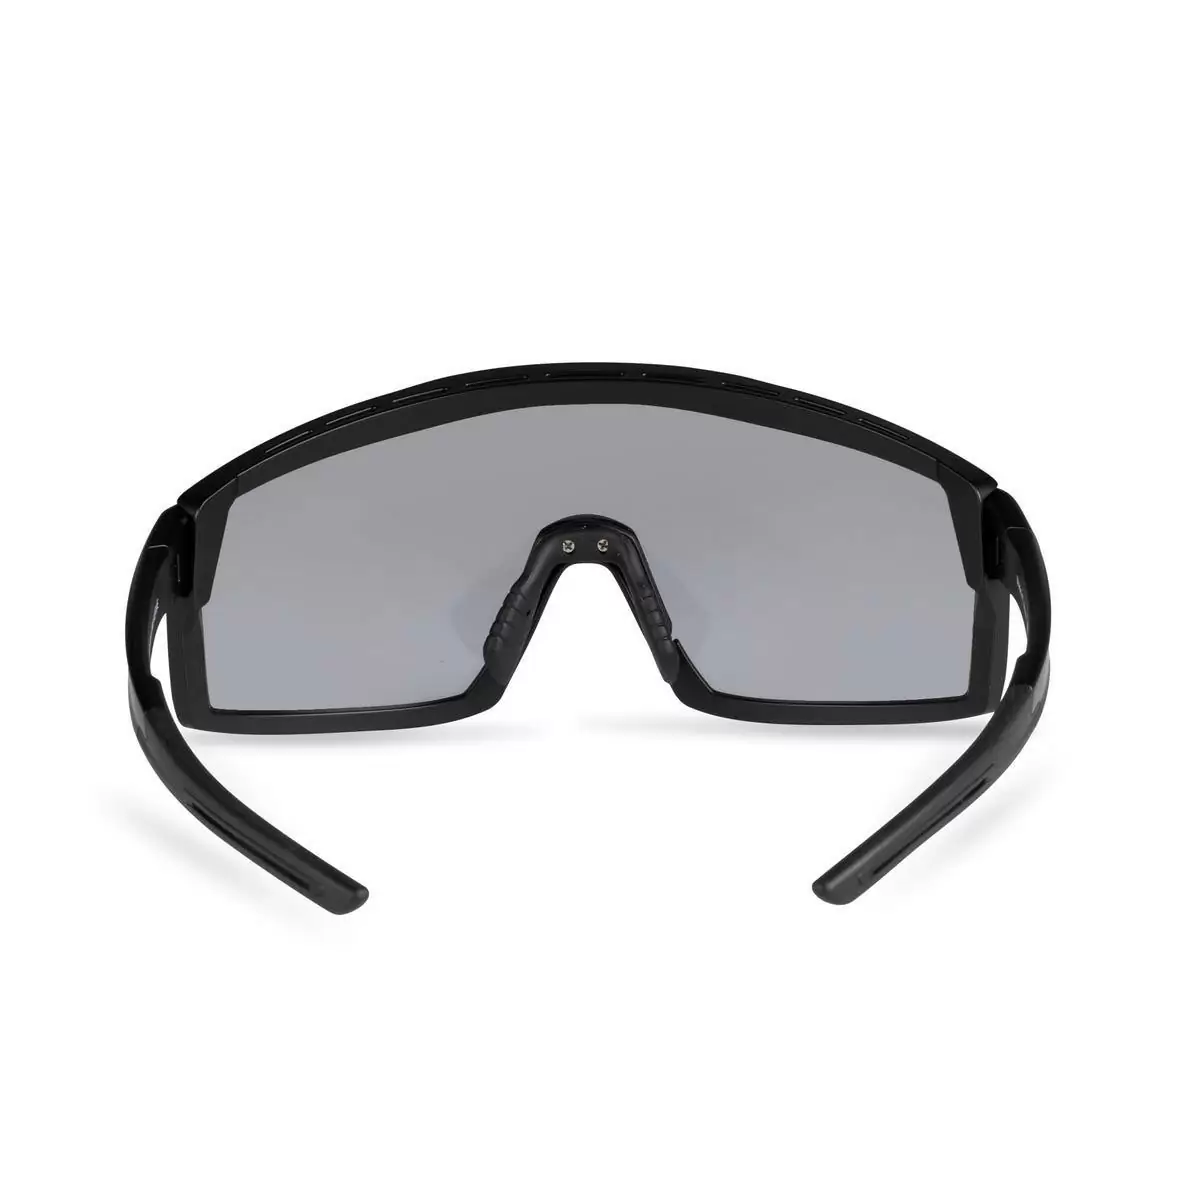 Sunglasses Verve HDII photochromic #3